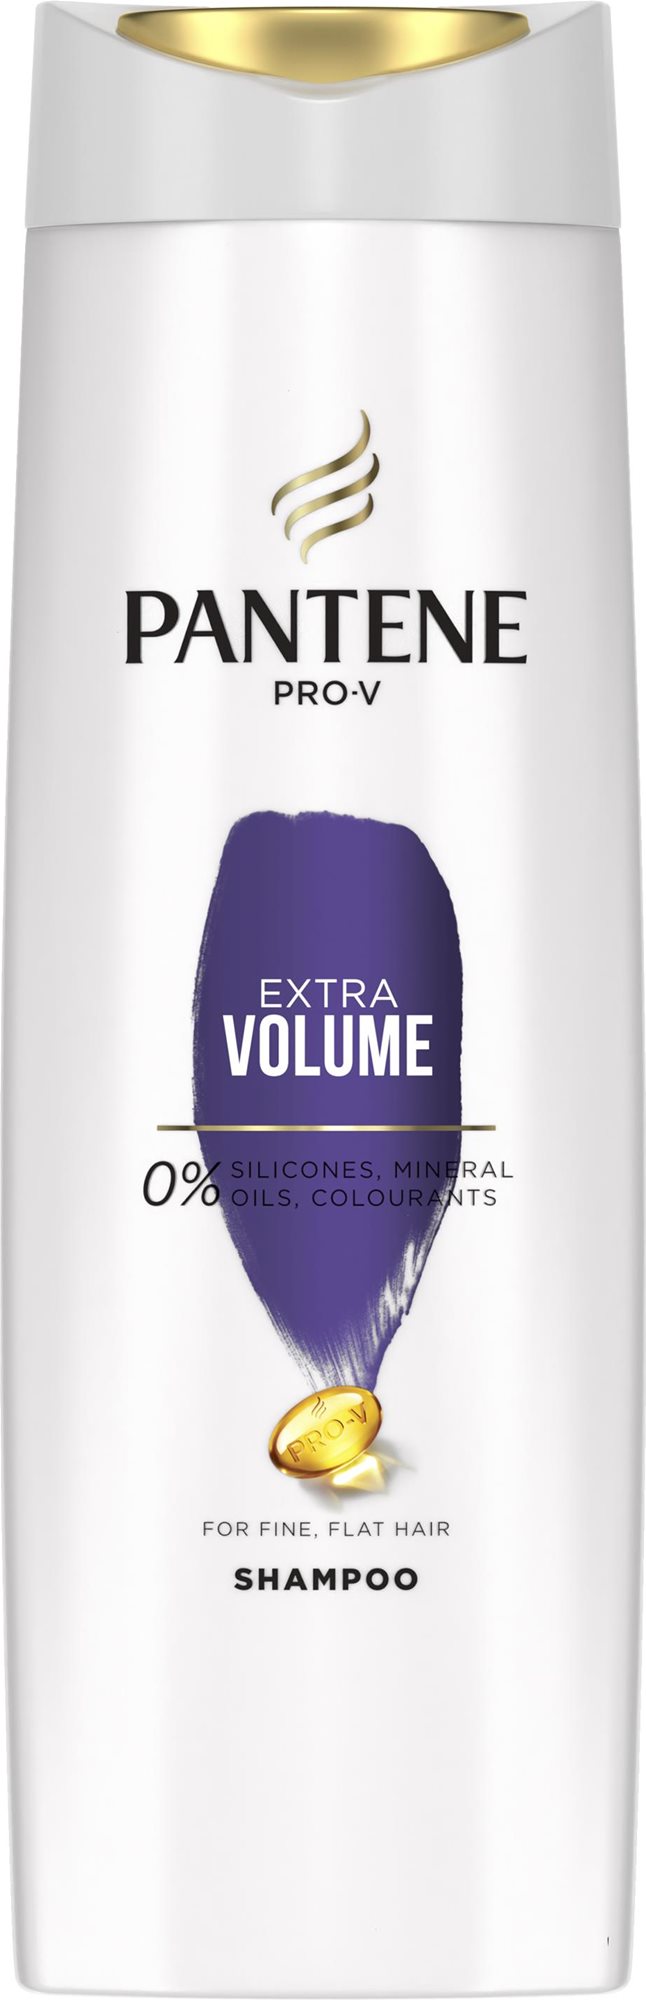 PANTENE Pro-V Volume & Body Sampon laza hajra 400 ml